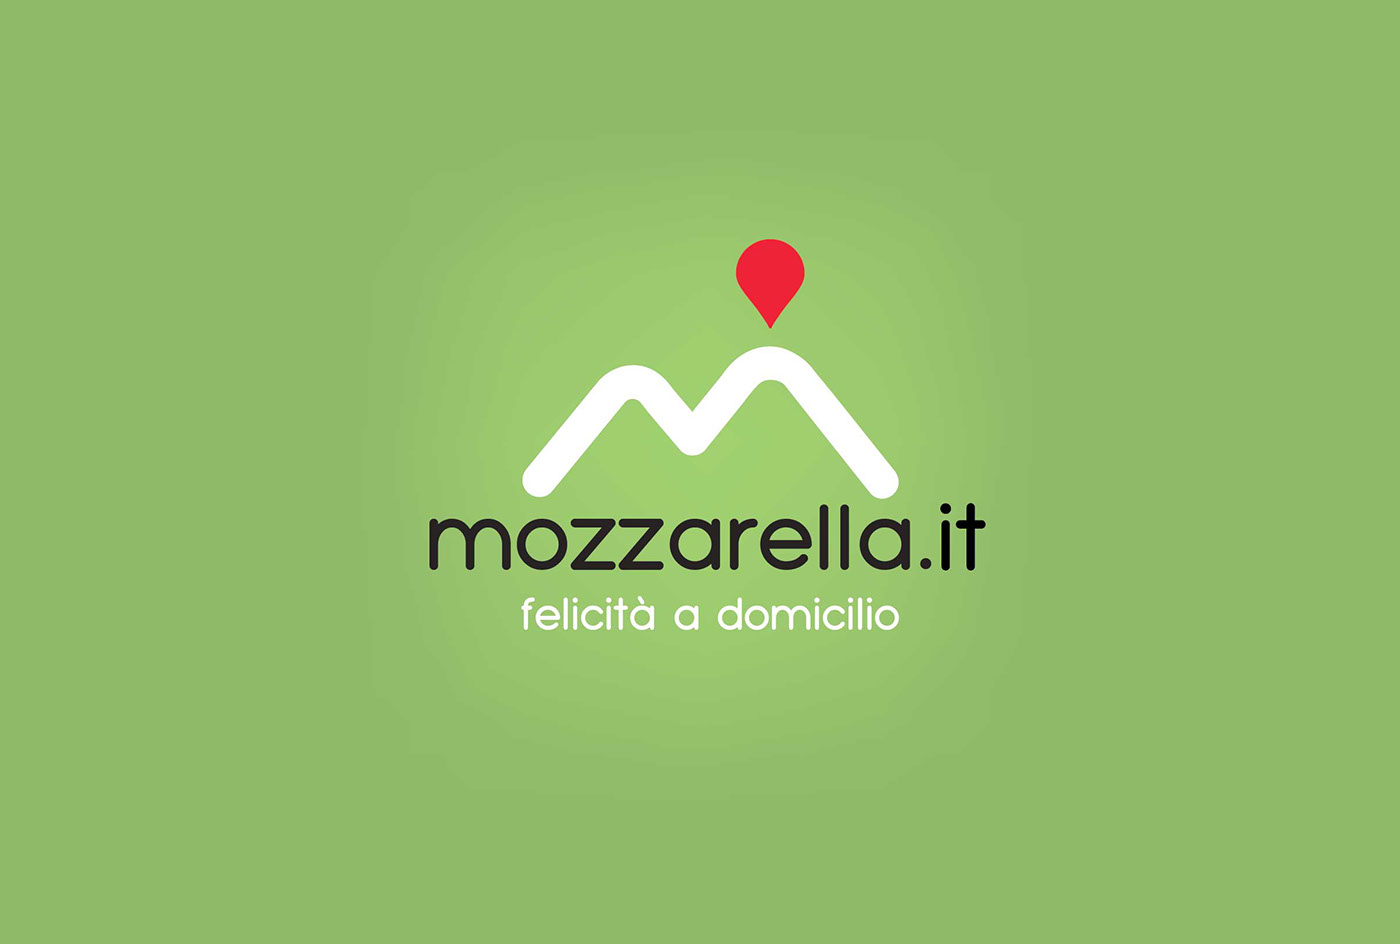 mozzarella brand freshfood Italy